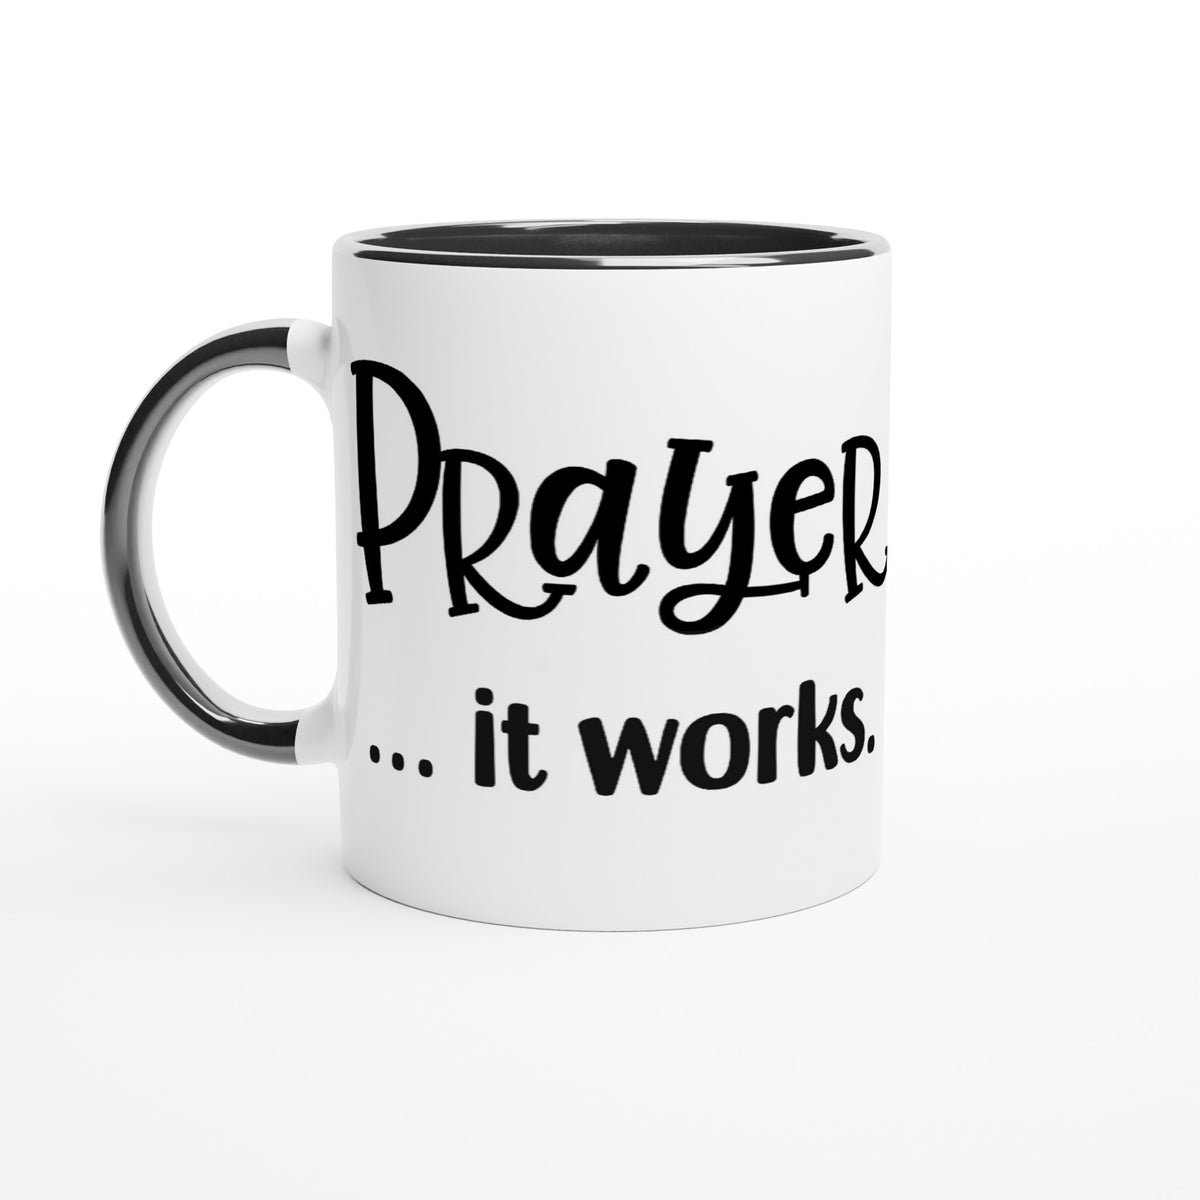 Prayer... it works - Beautiful Mug